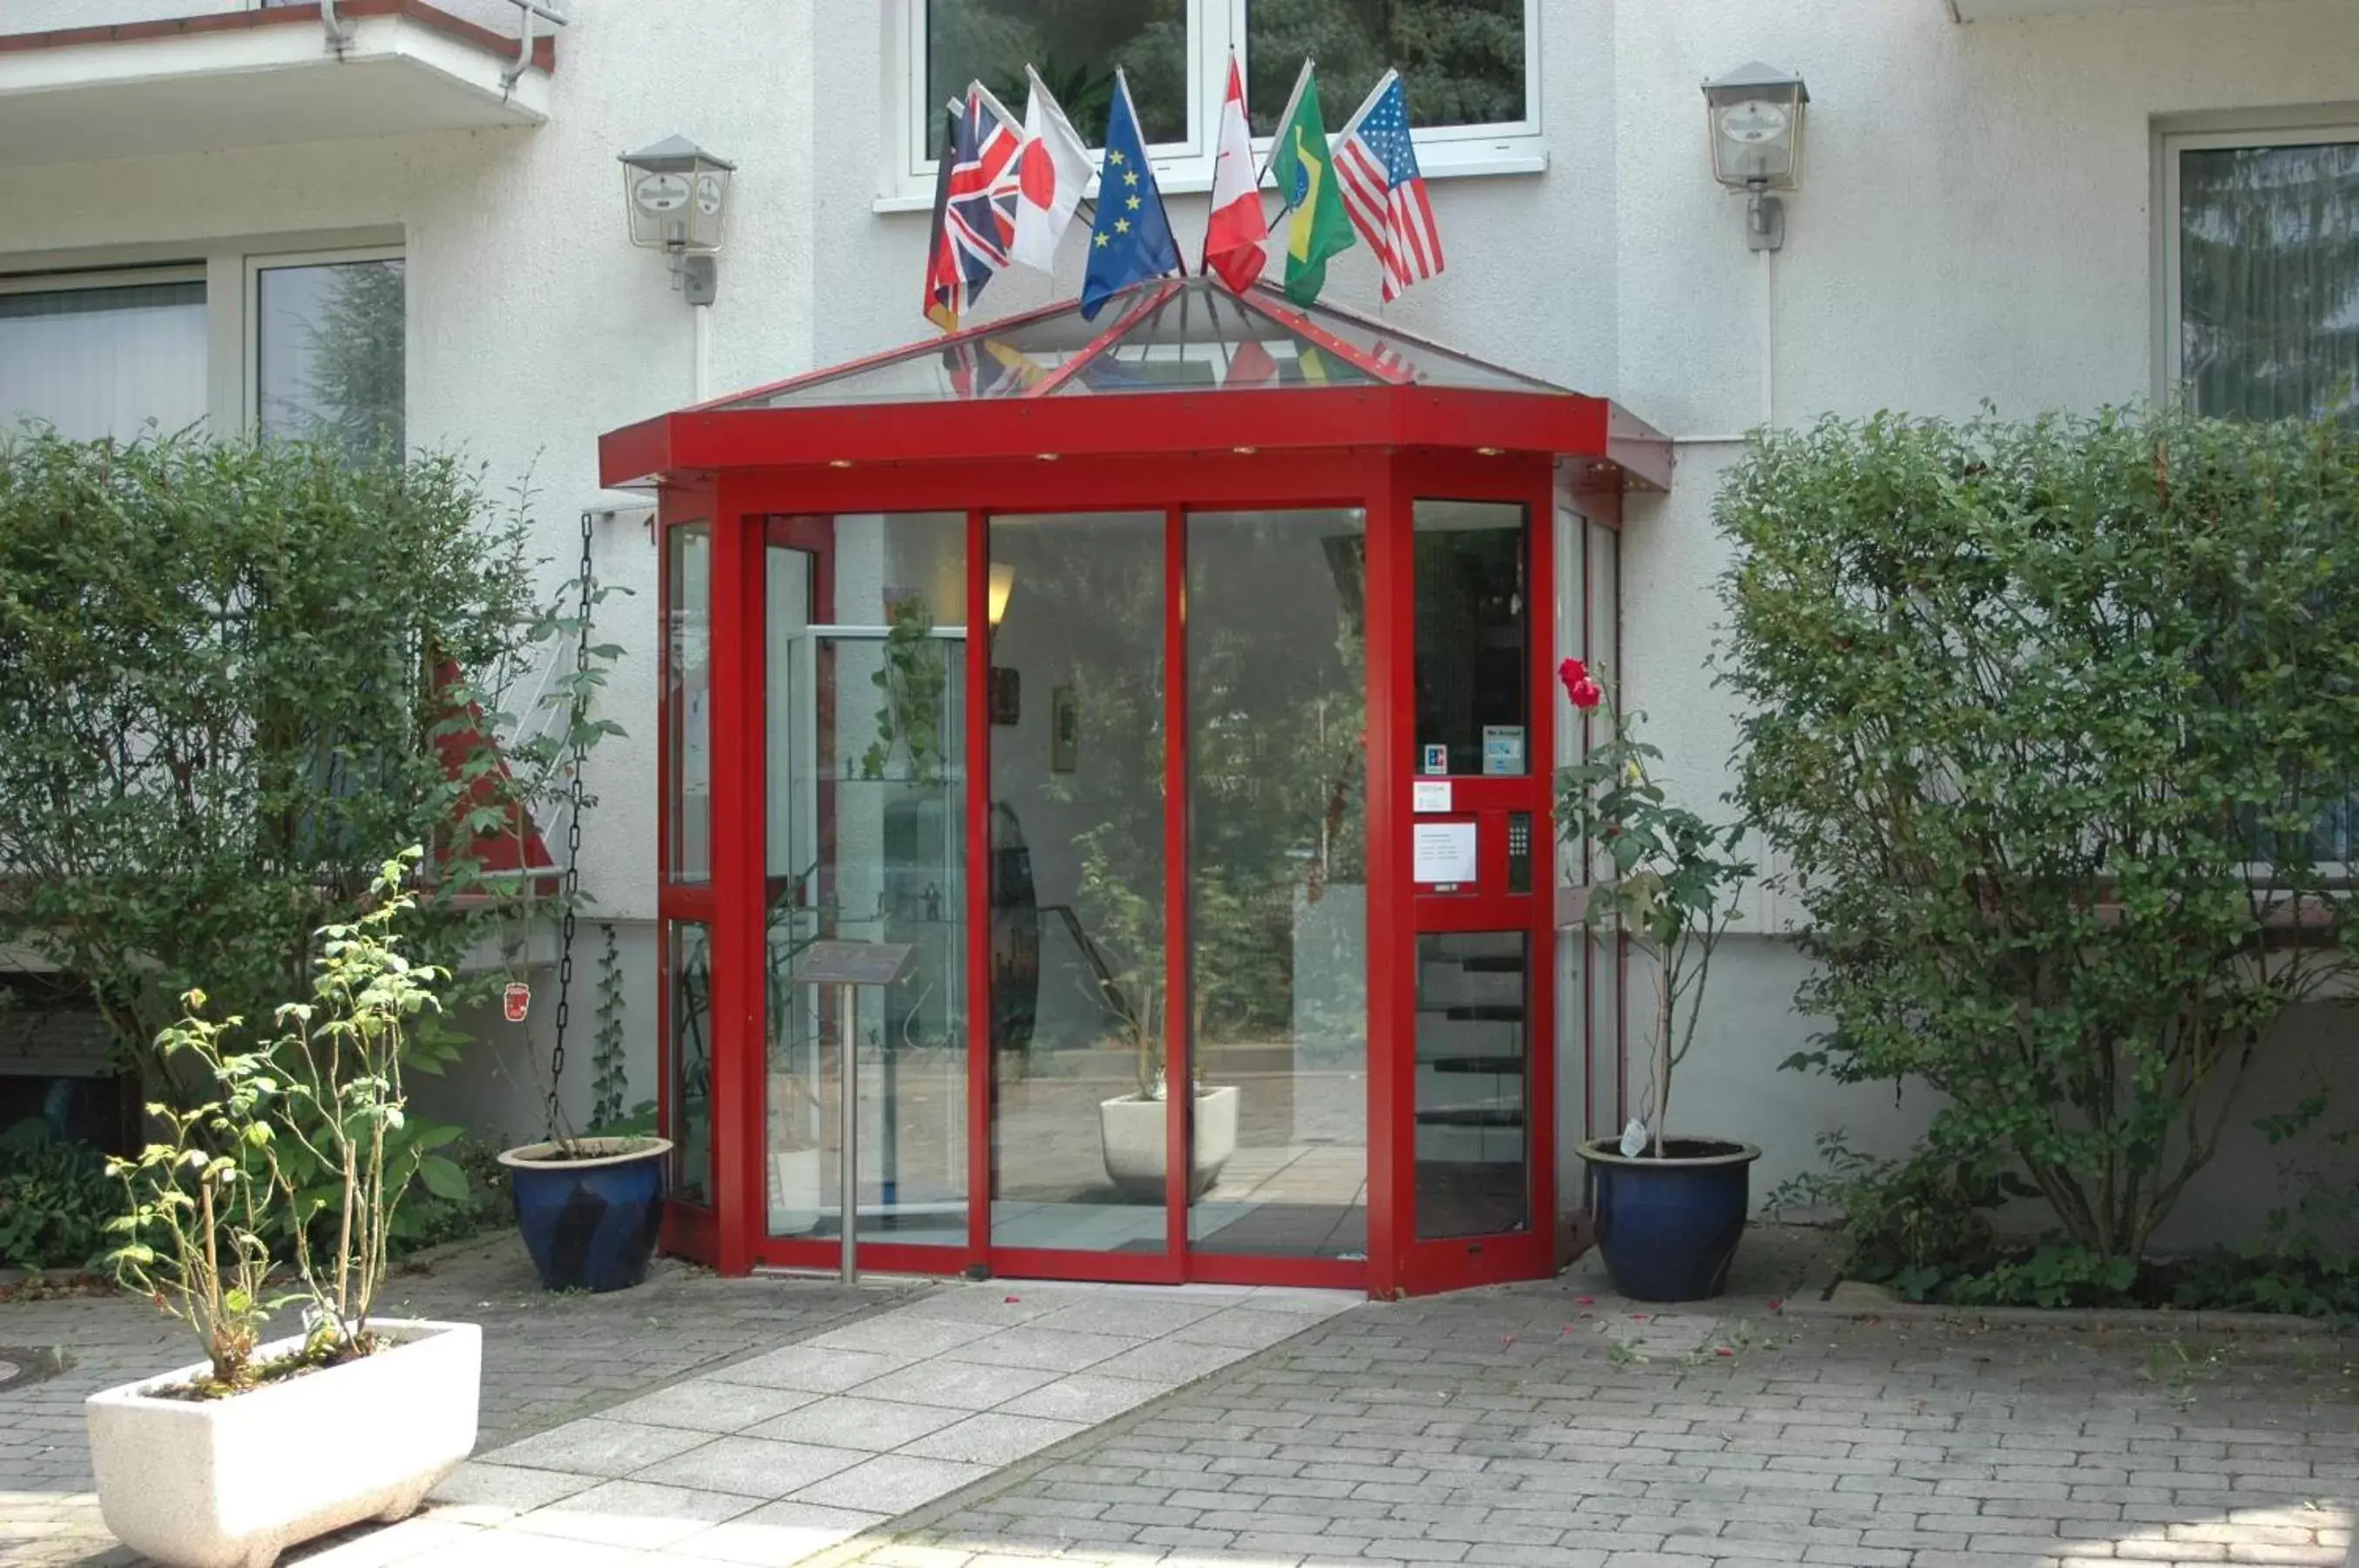 Facade/entrance in Hotel Roemerstein